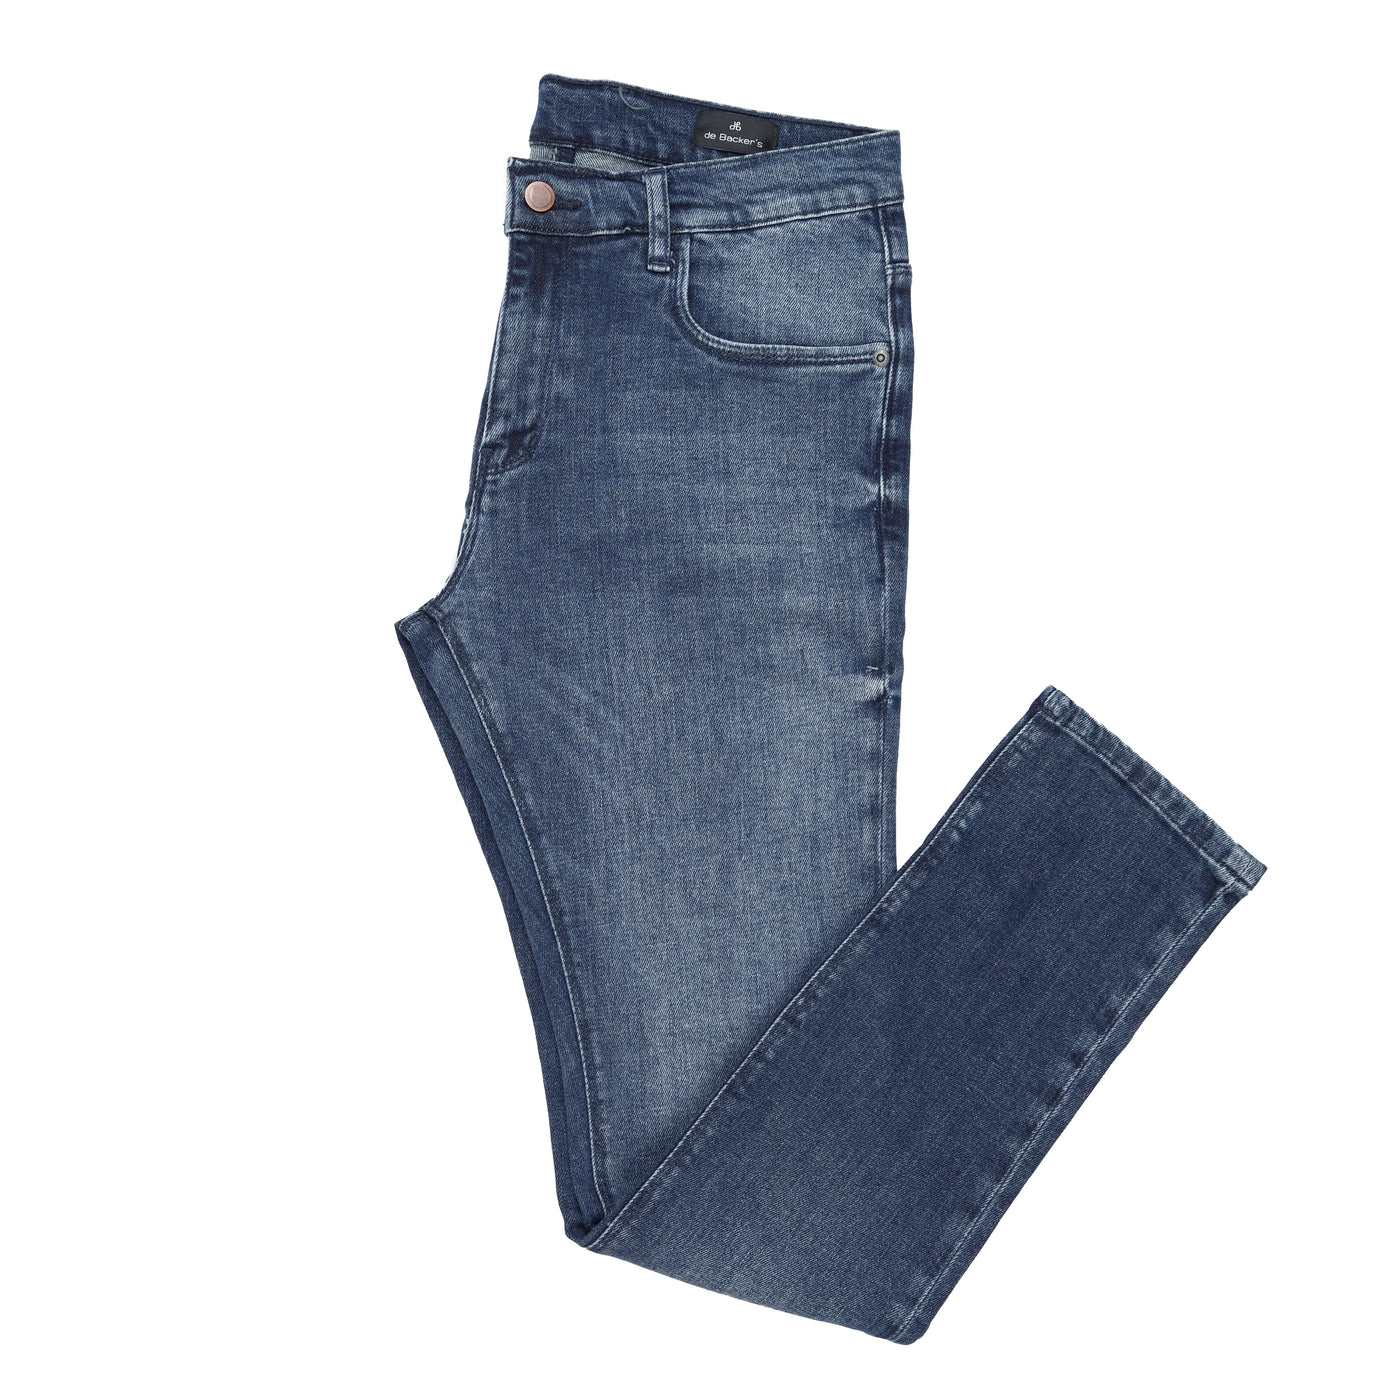 Orignal Jeans